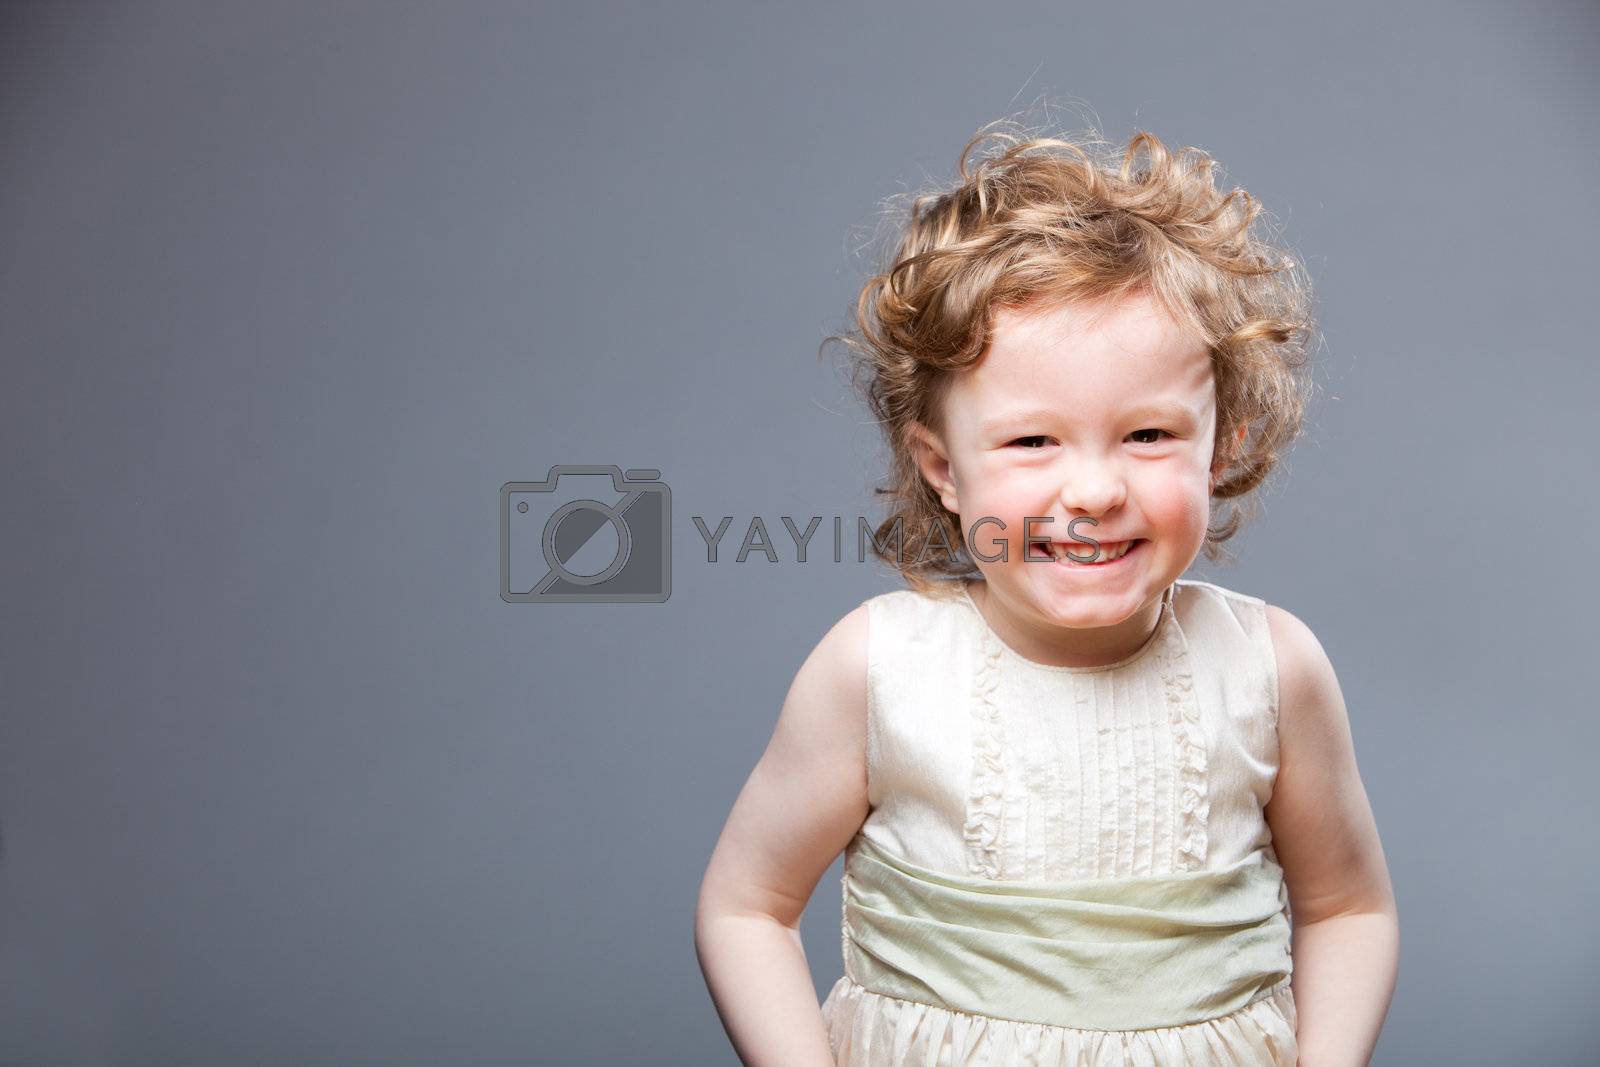 Royalty free image of Smiling Girl by shalamov